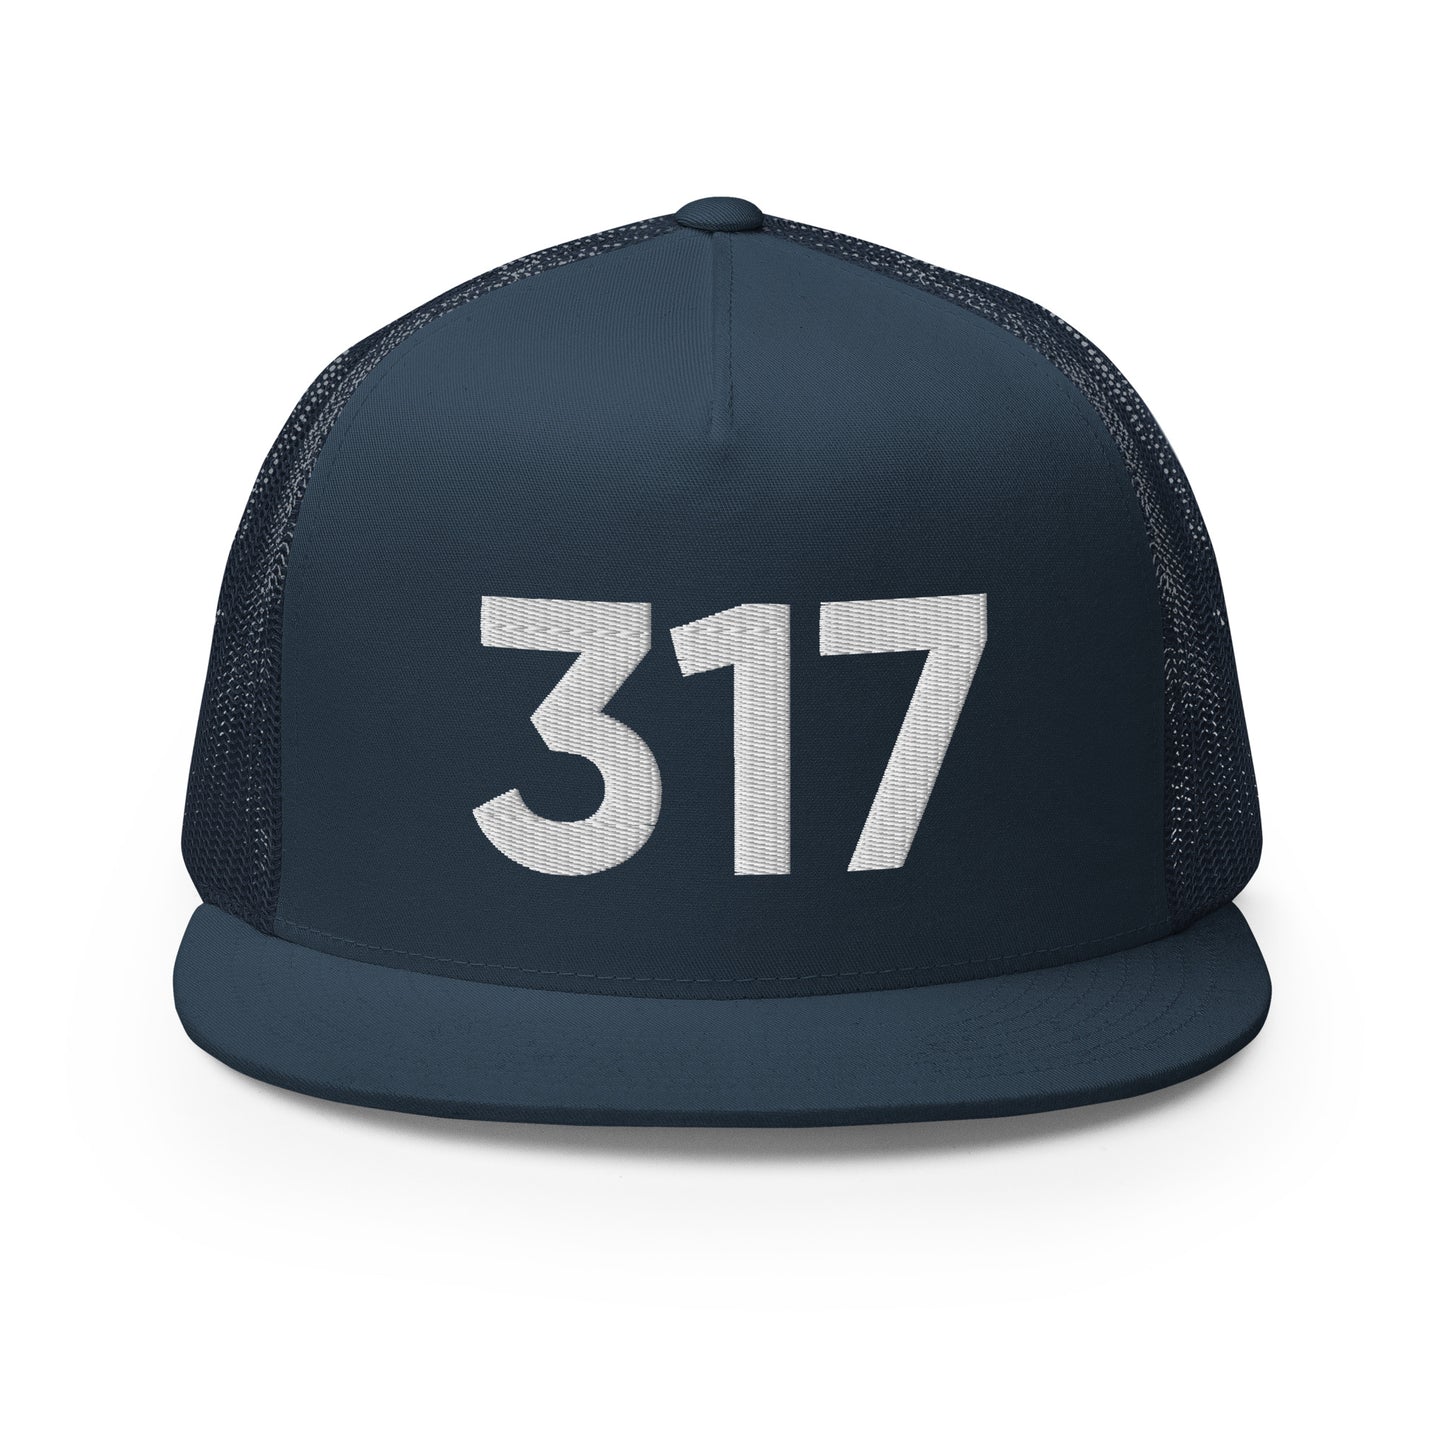 317 Indy Proud Trucker Hat